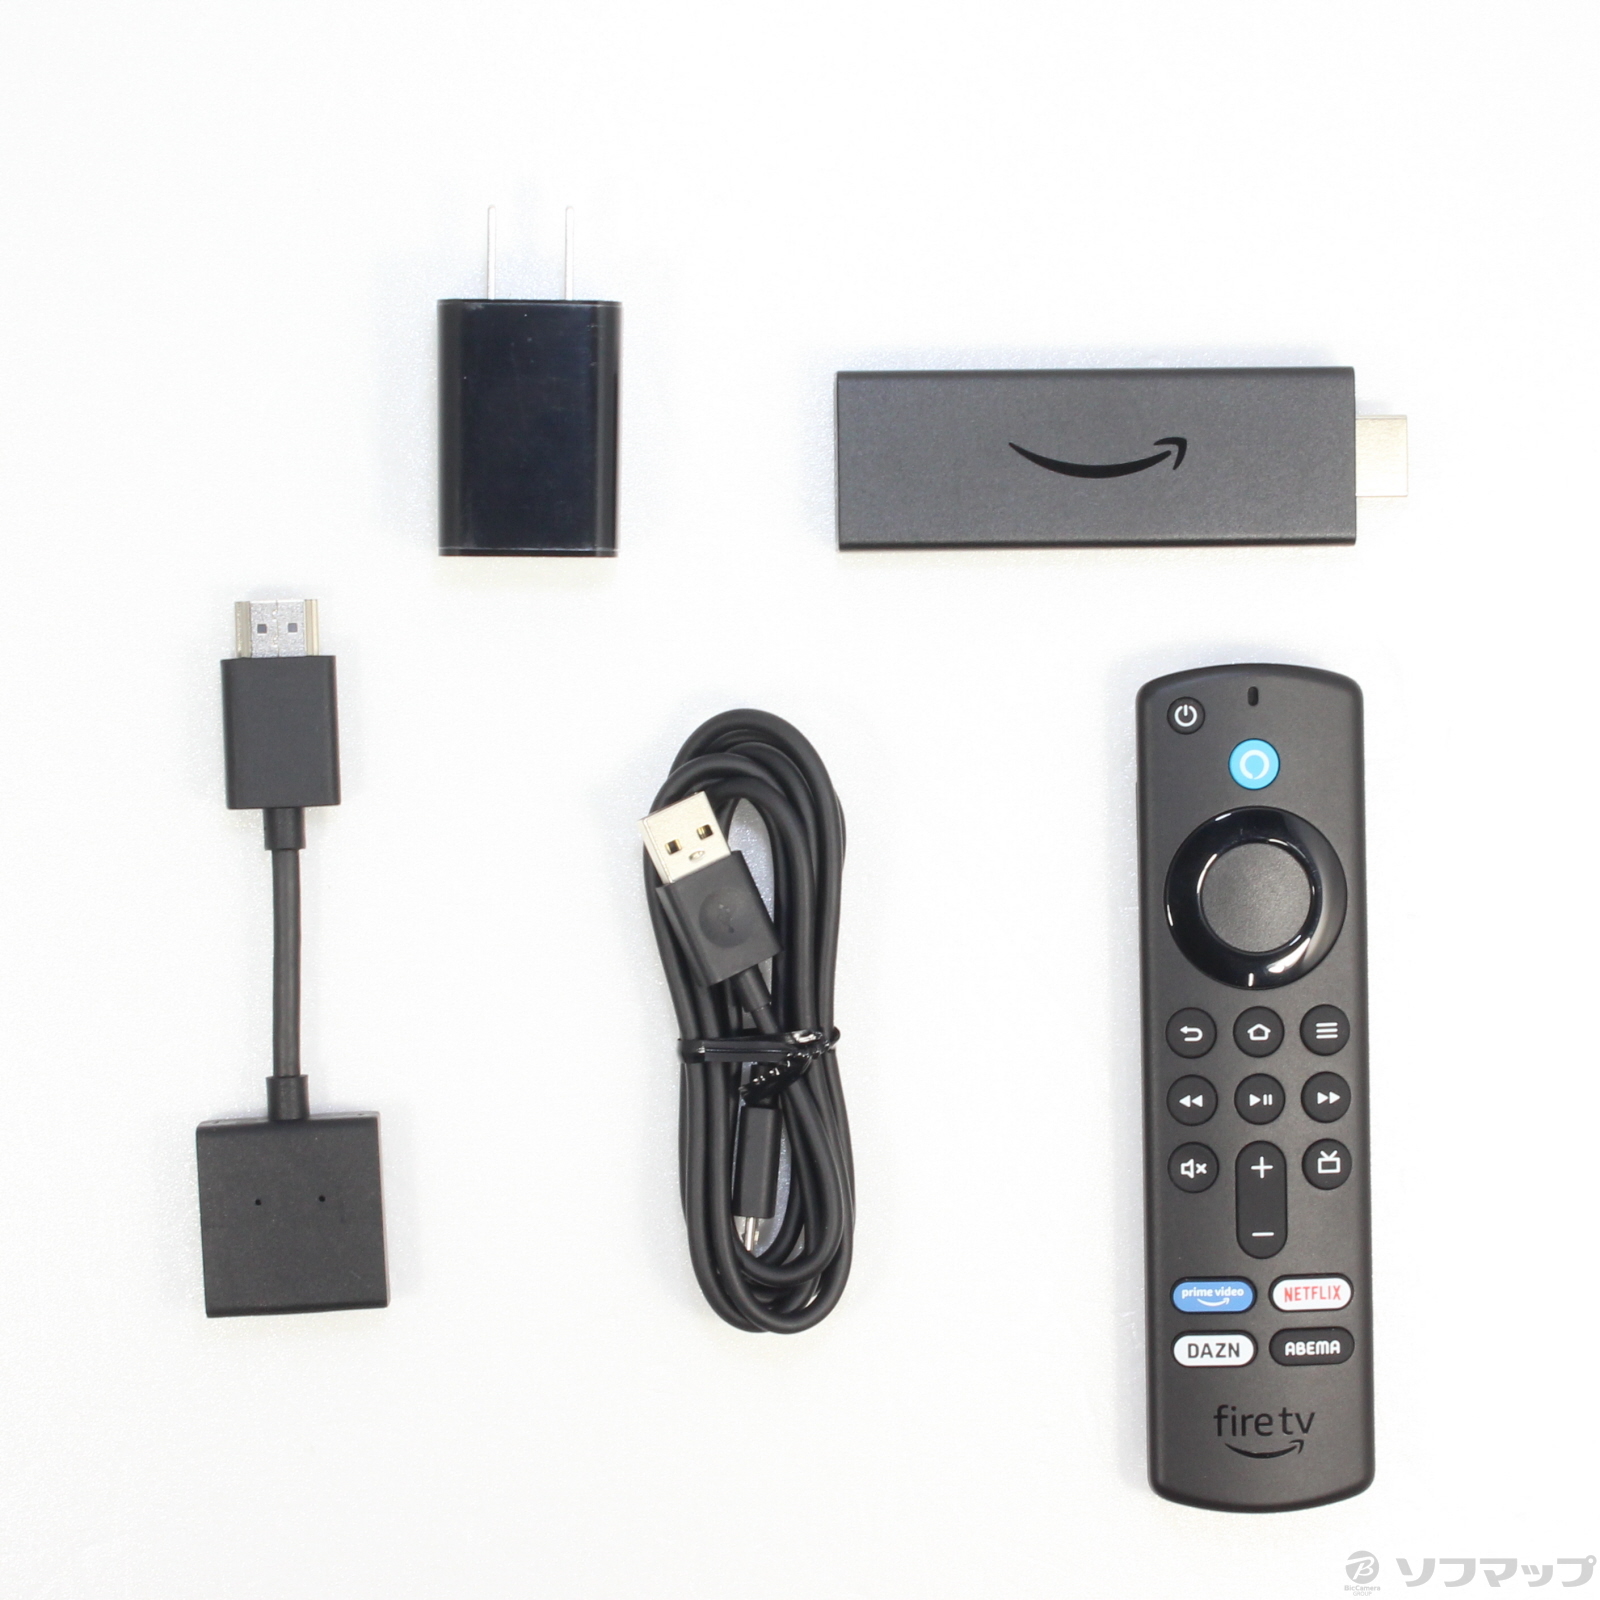 Fire TV Stick - Alexa対応音声認識リモコン(第3世代)付属